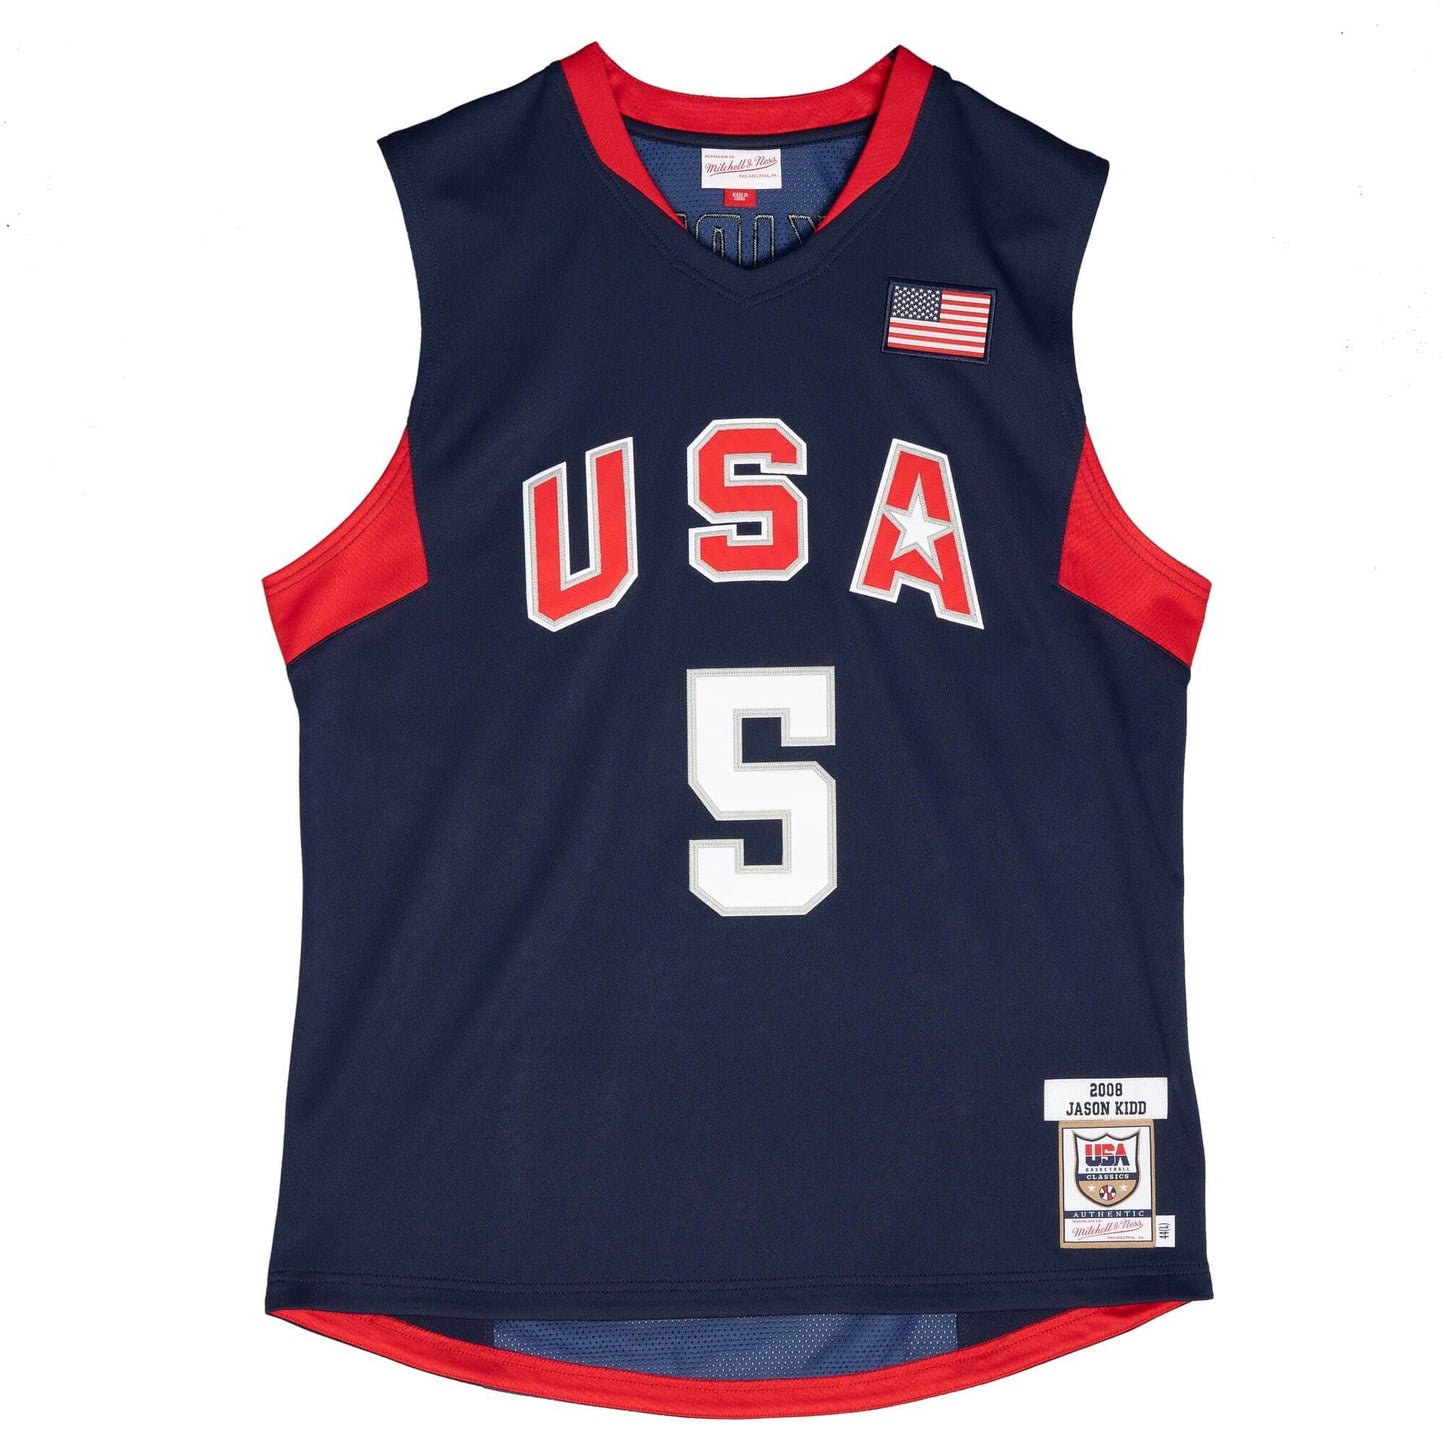 NBA Authentic Jersey Team USA 2008 Jason Kidd